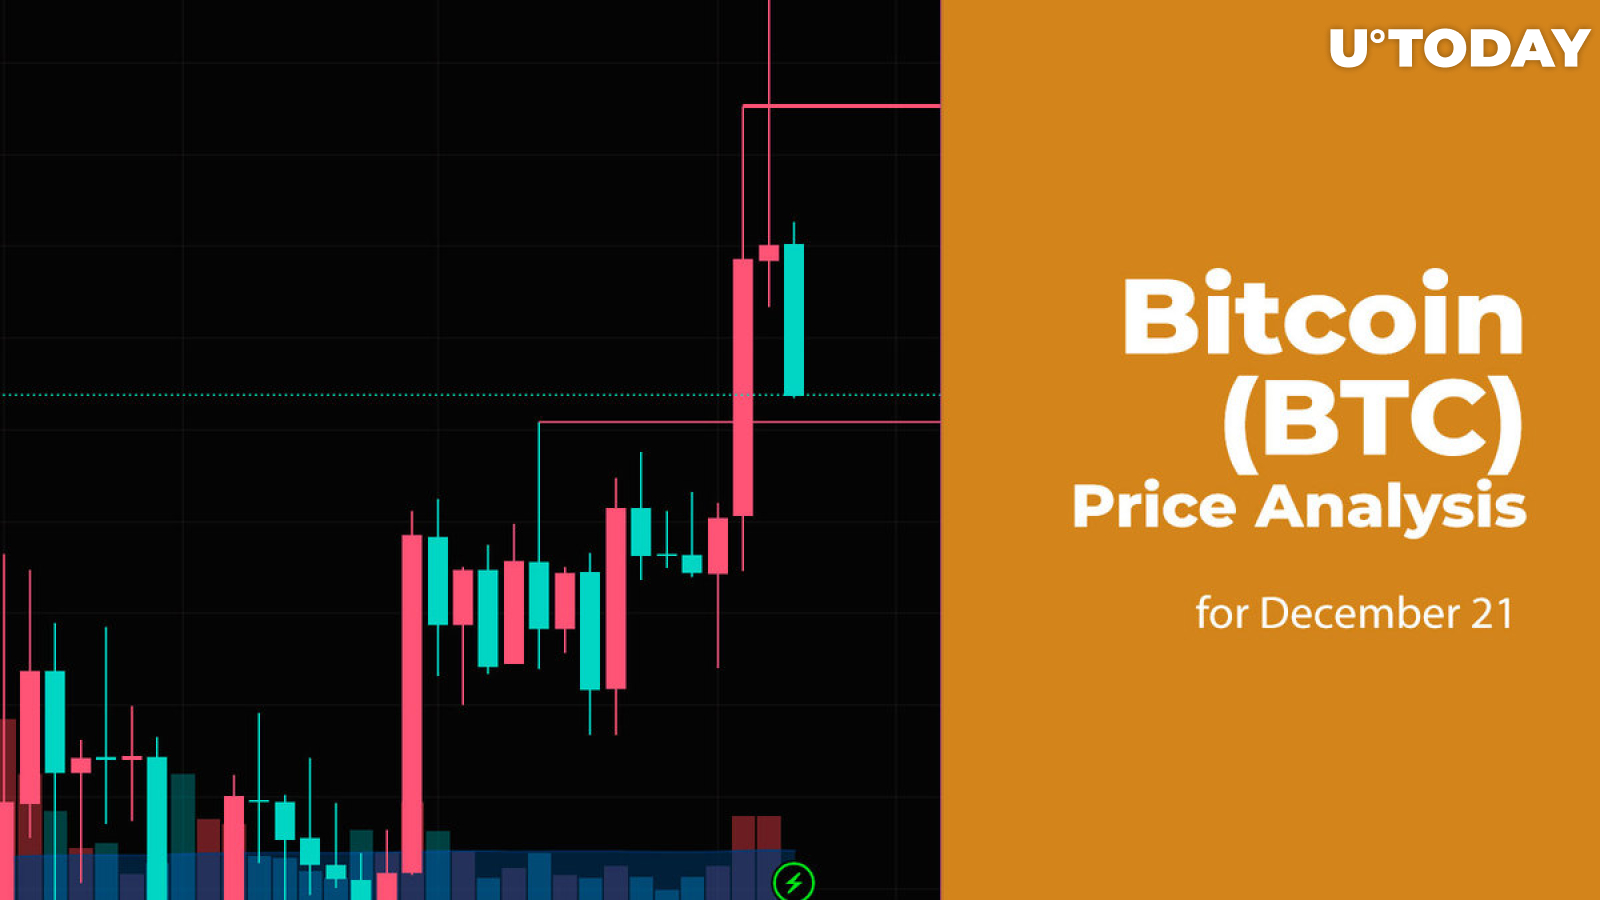 Bitcoin (BTC) Price Analysis for December 21